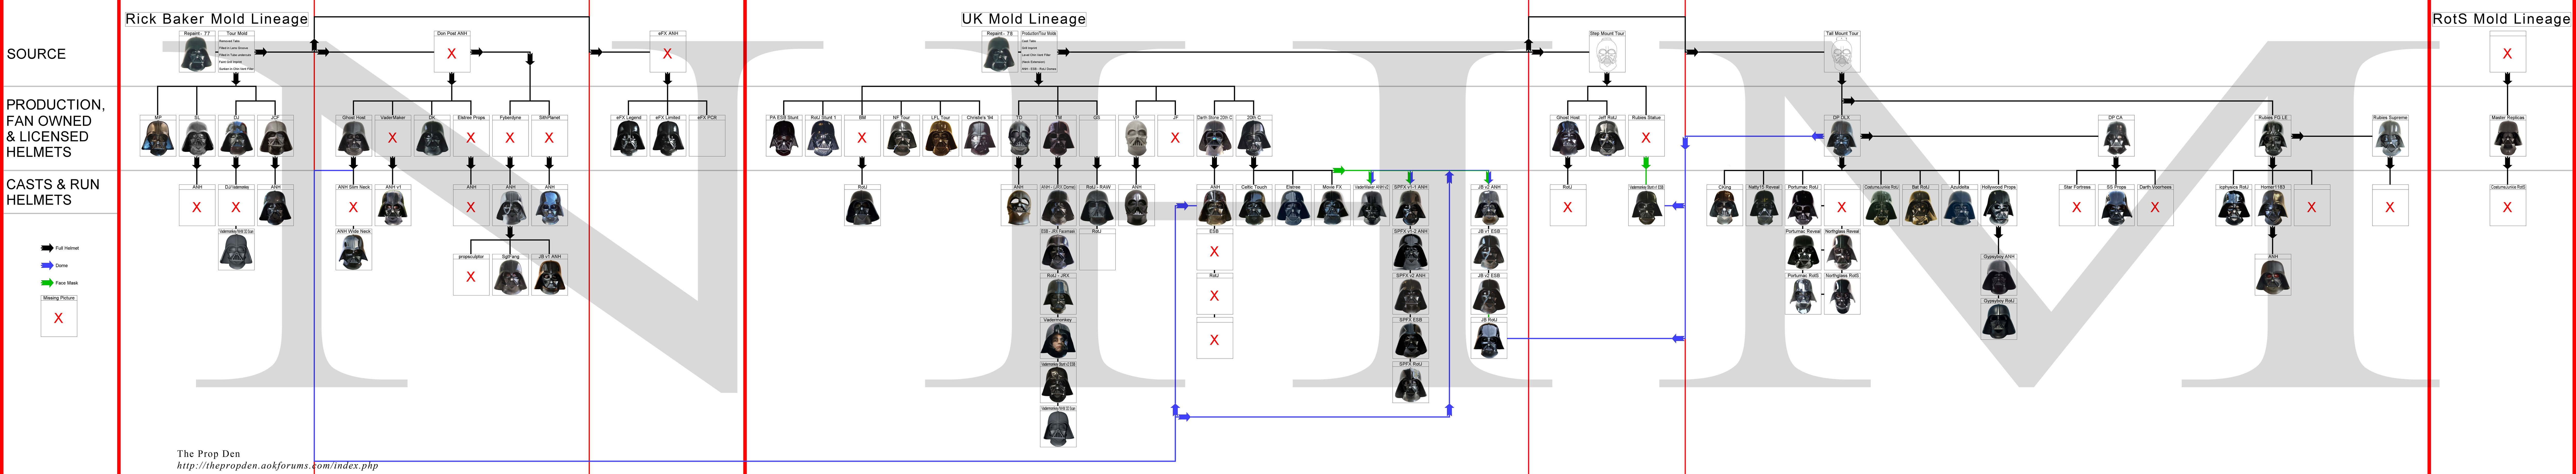 updated lineage tree.jpeg